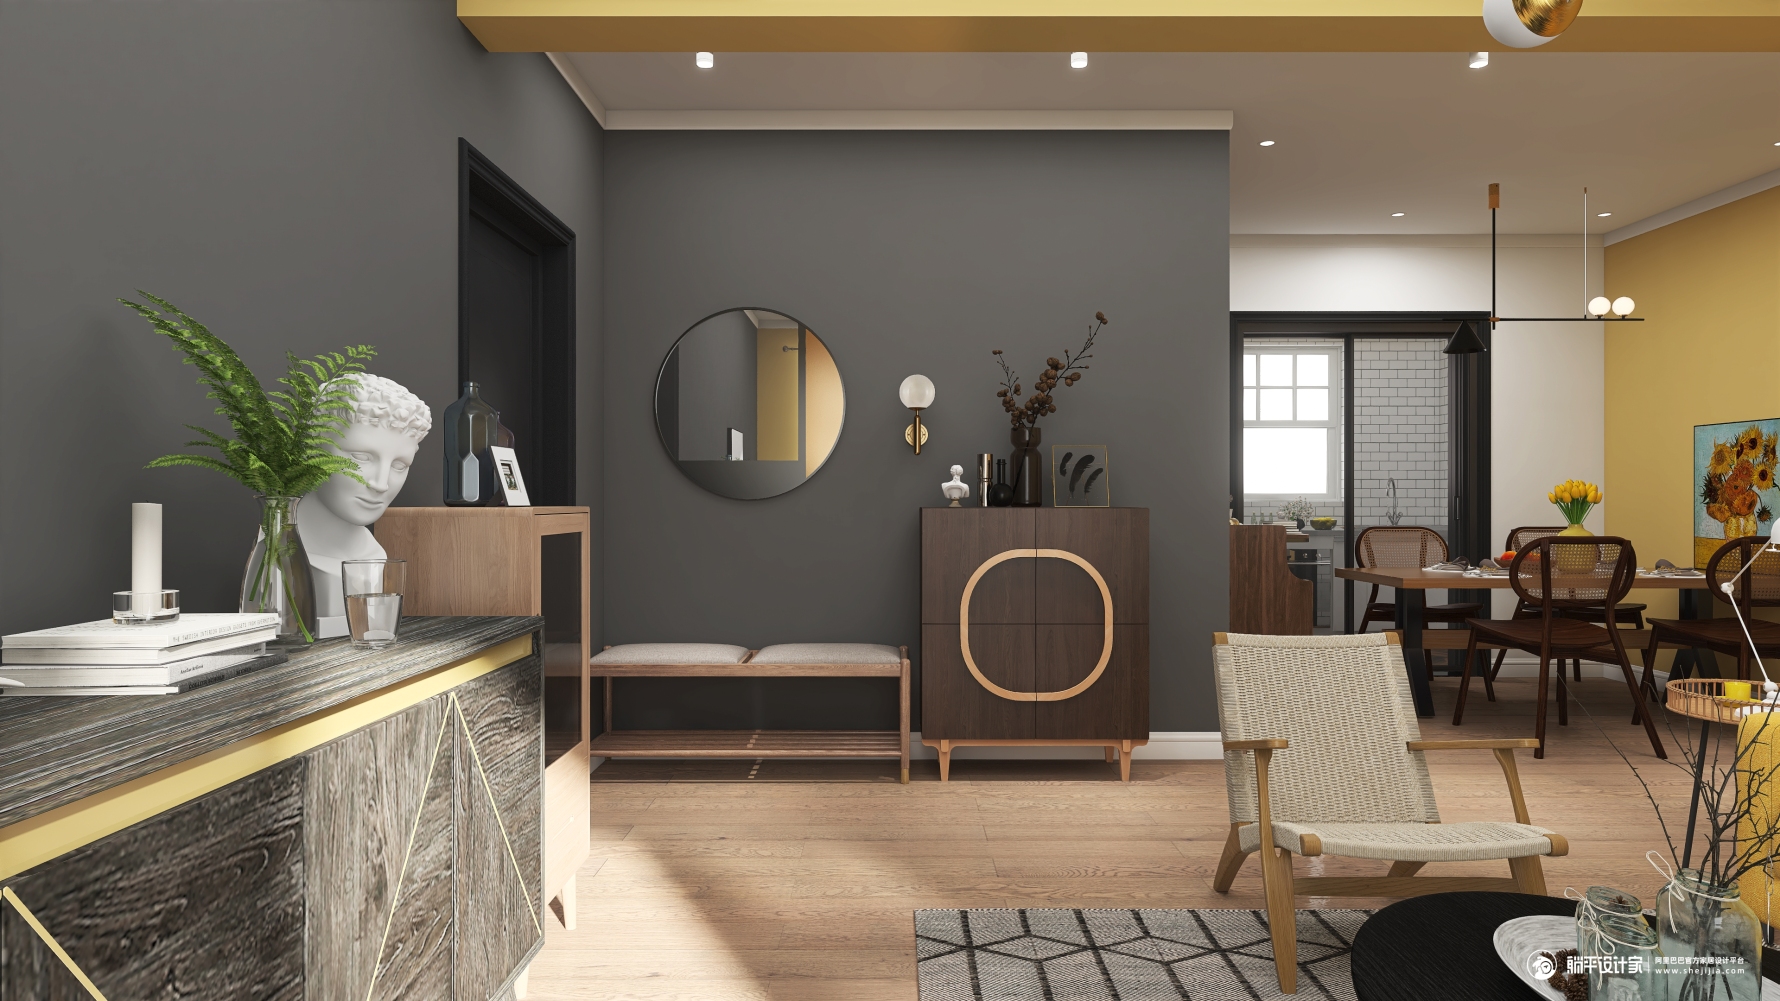 pantone2021靓丽黄&极致灰 - 现代风格两室一厅装修效果图 - 胖梨设计效果图 - 躺平设计家